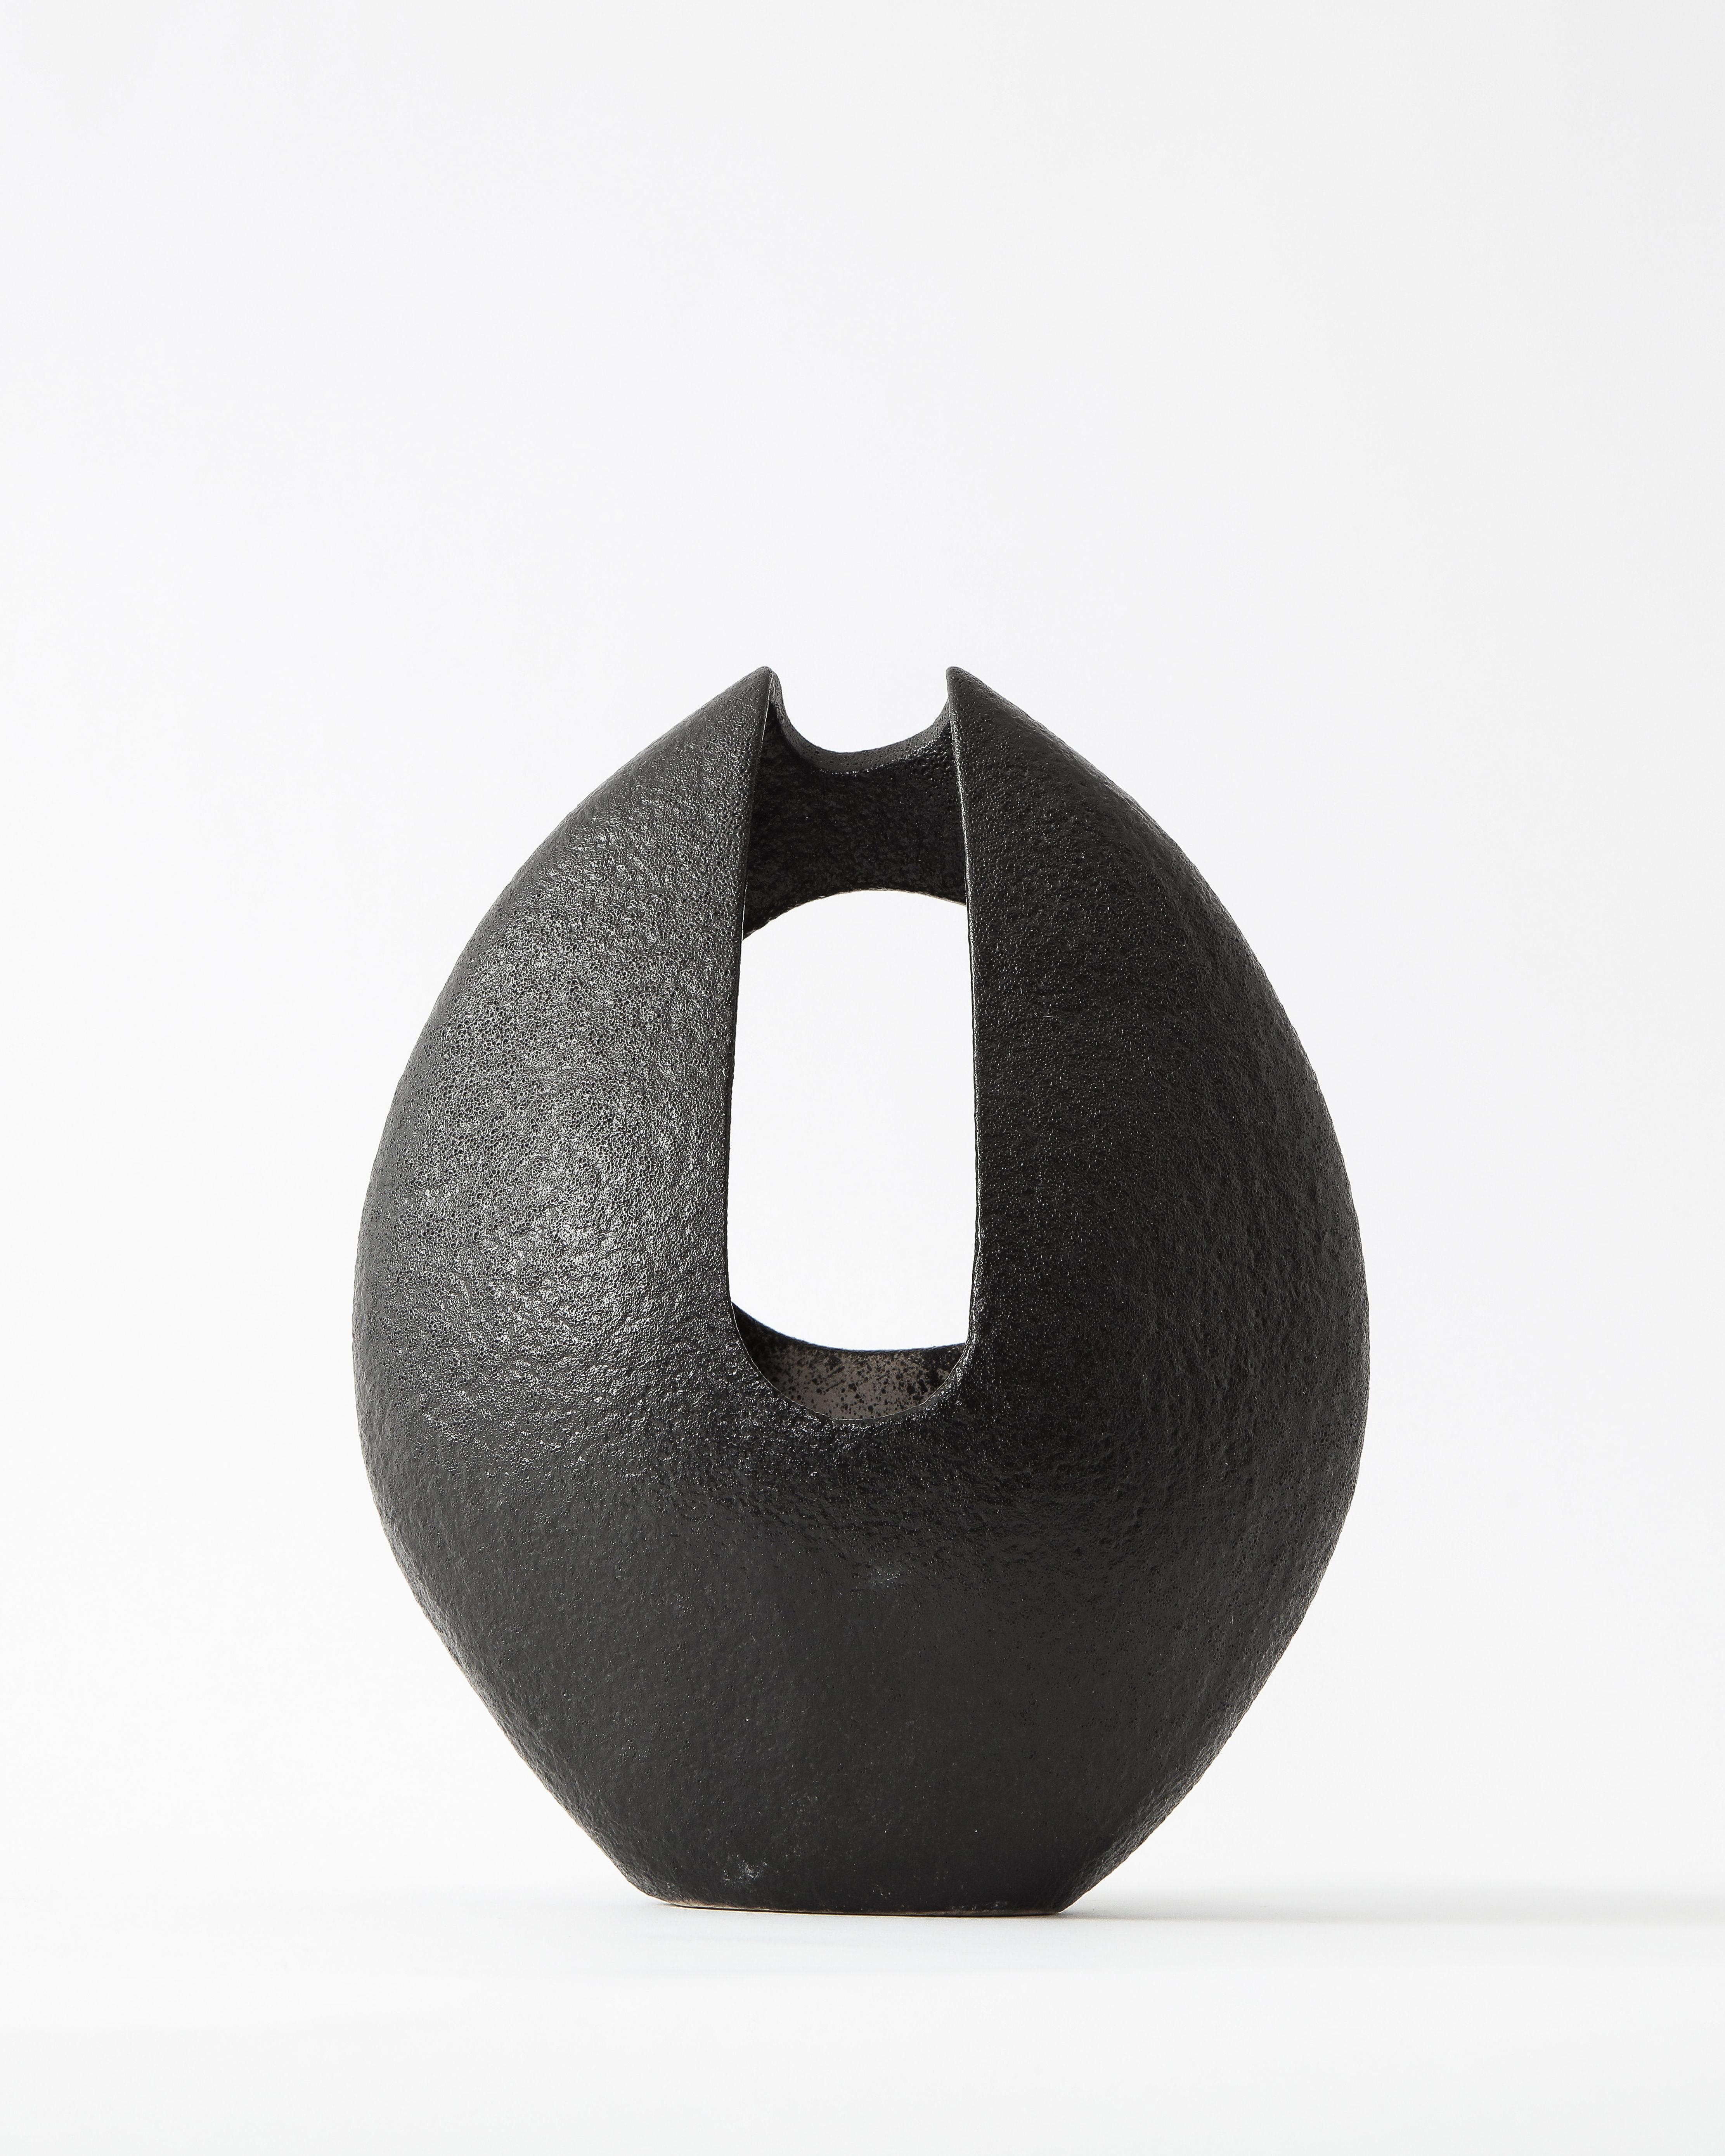 Asymmetrical Almond-Shaped Black Textured Japanese Ceramic Vessel 9